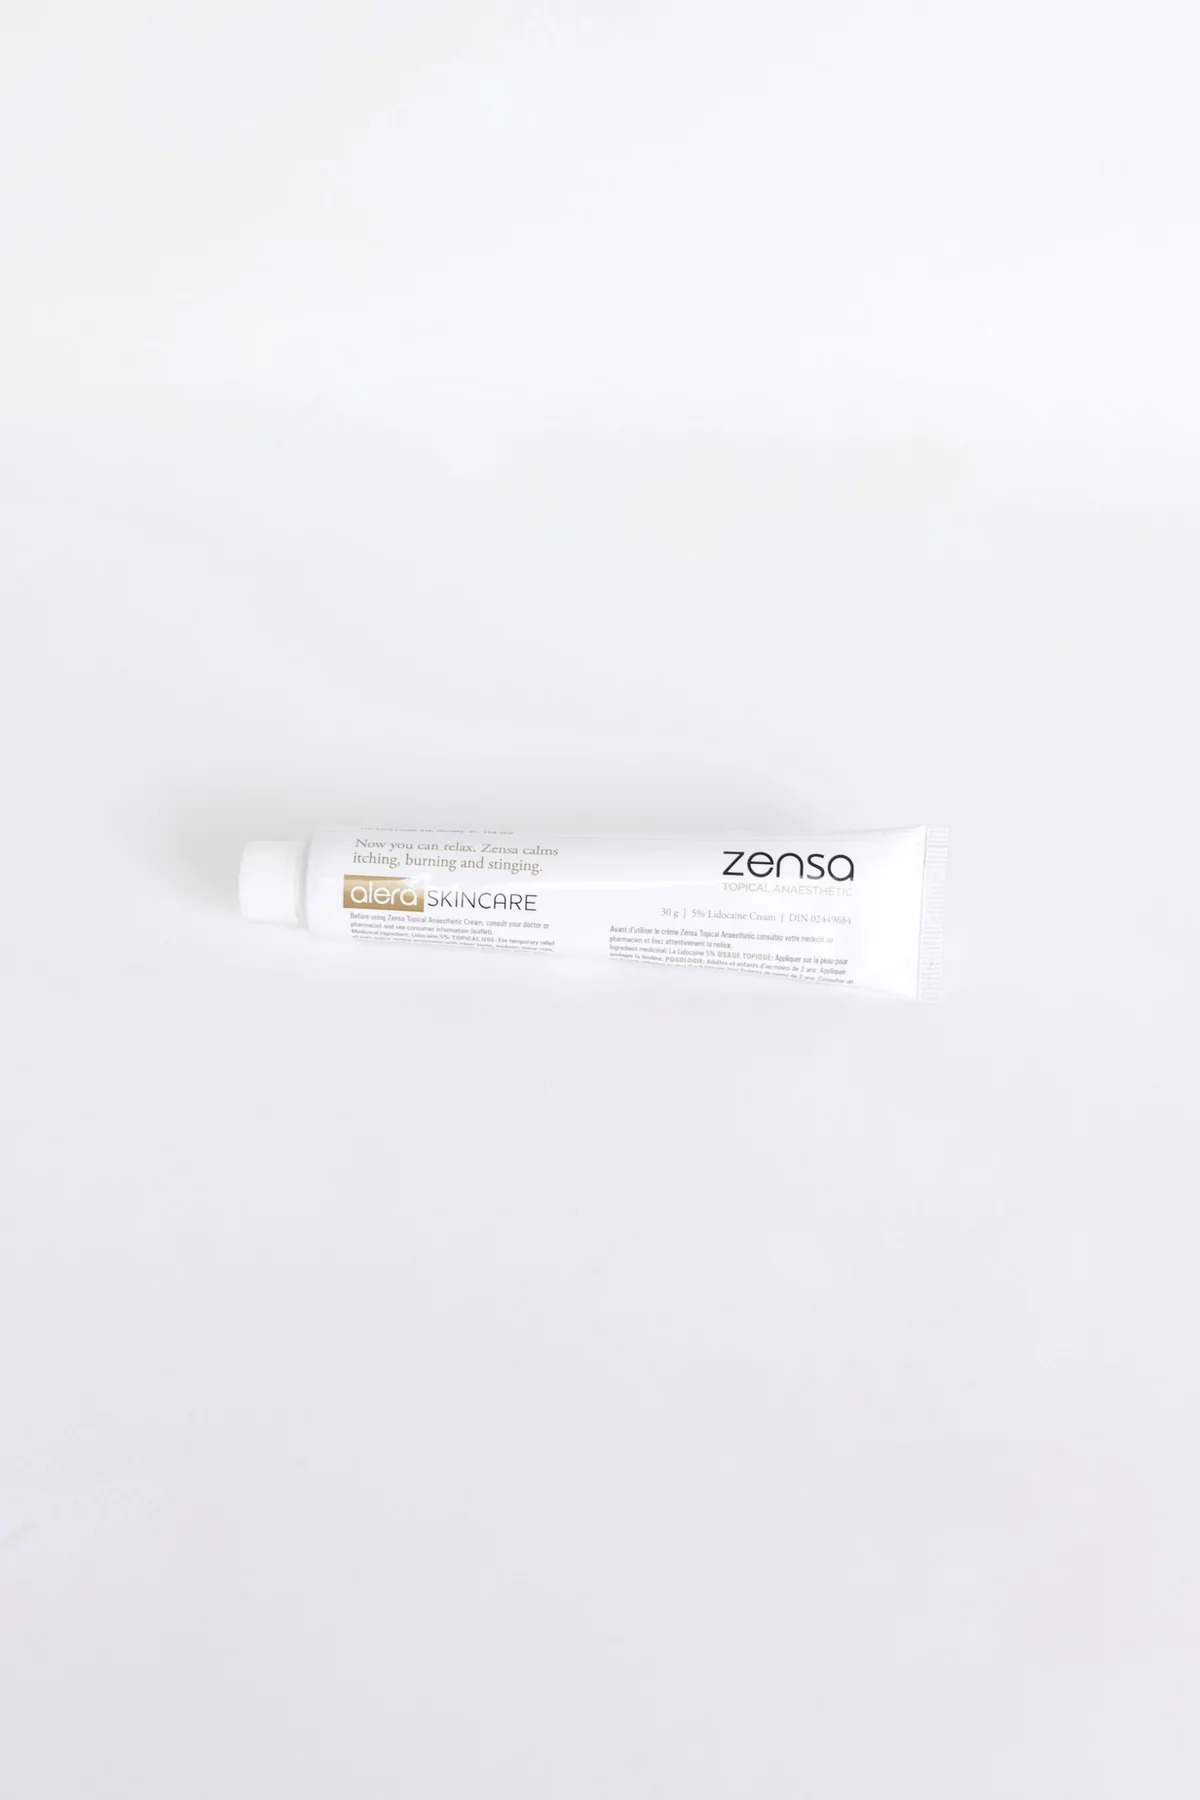 Zensa Numbing Cream – A Basic Review 